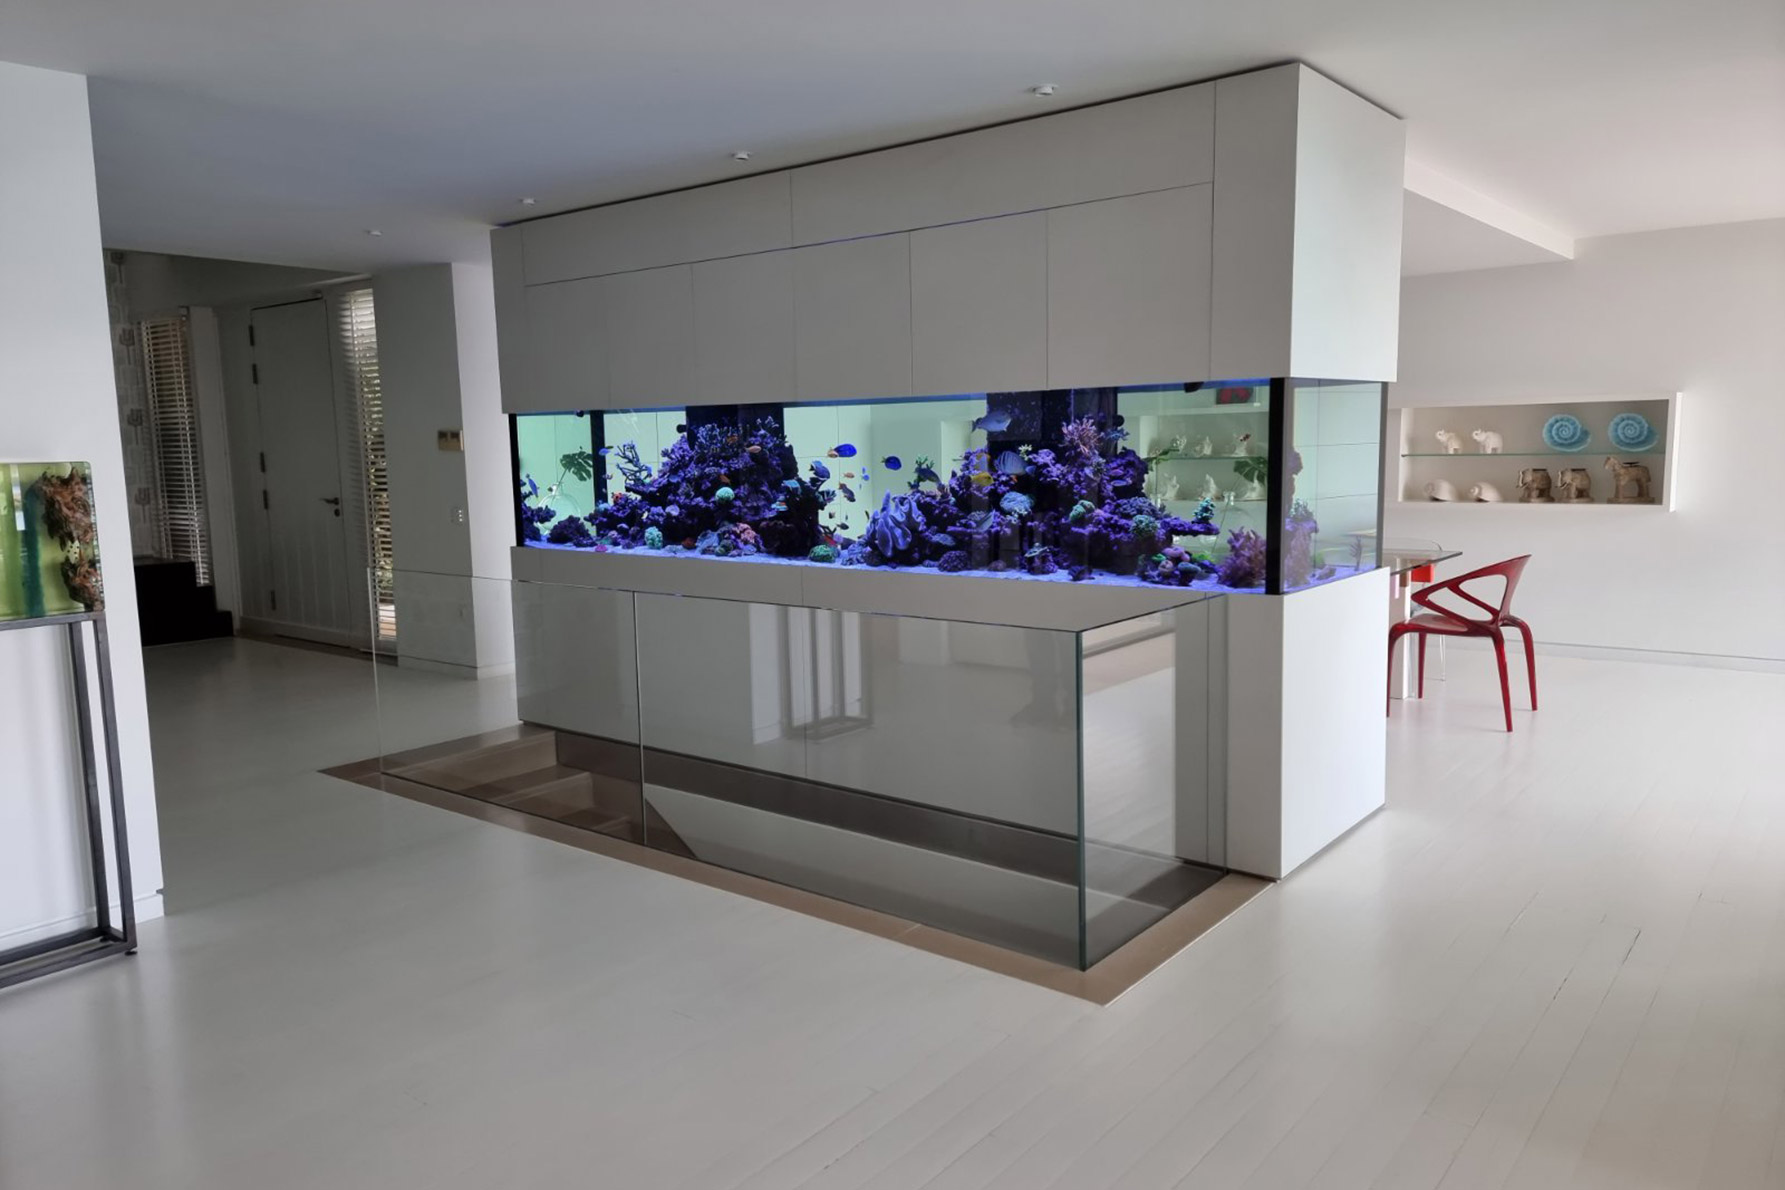 Reef Aquarium in a Private Residence